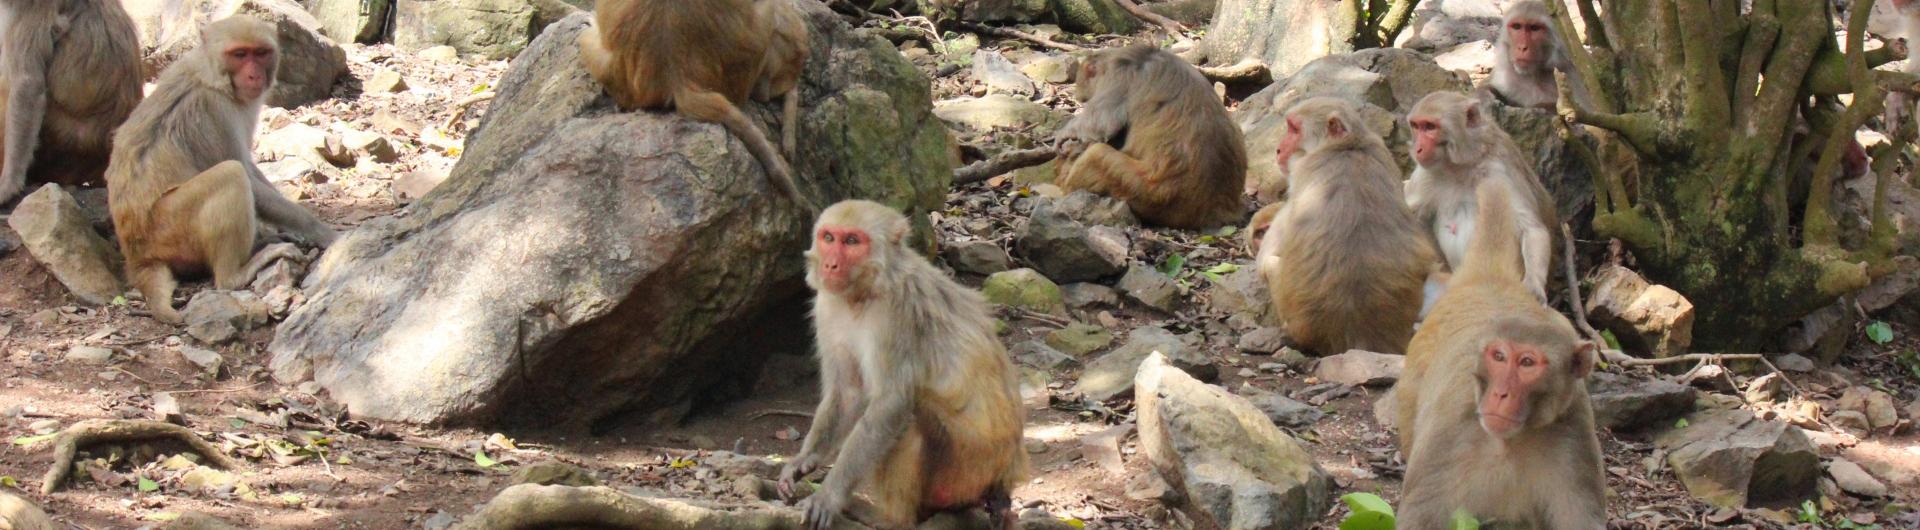 rhesus macaques